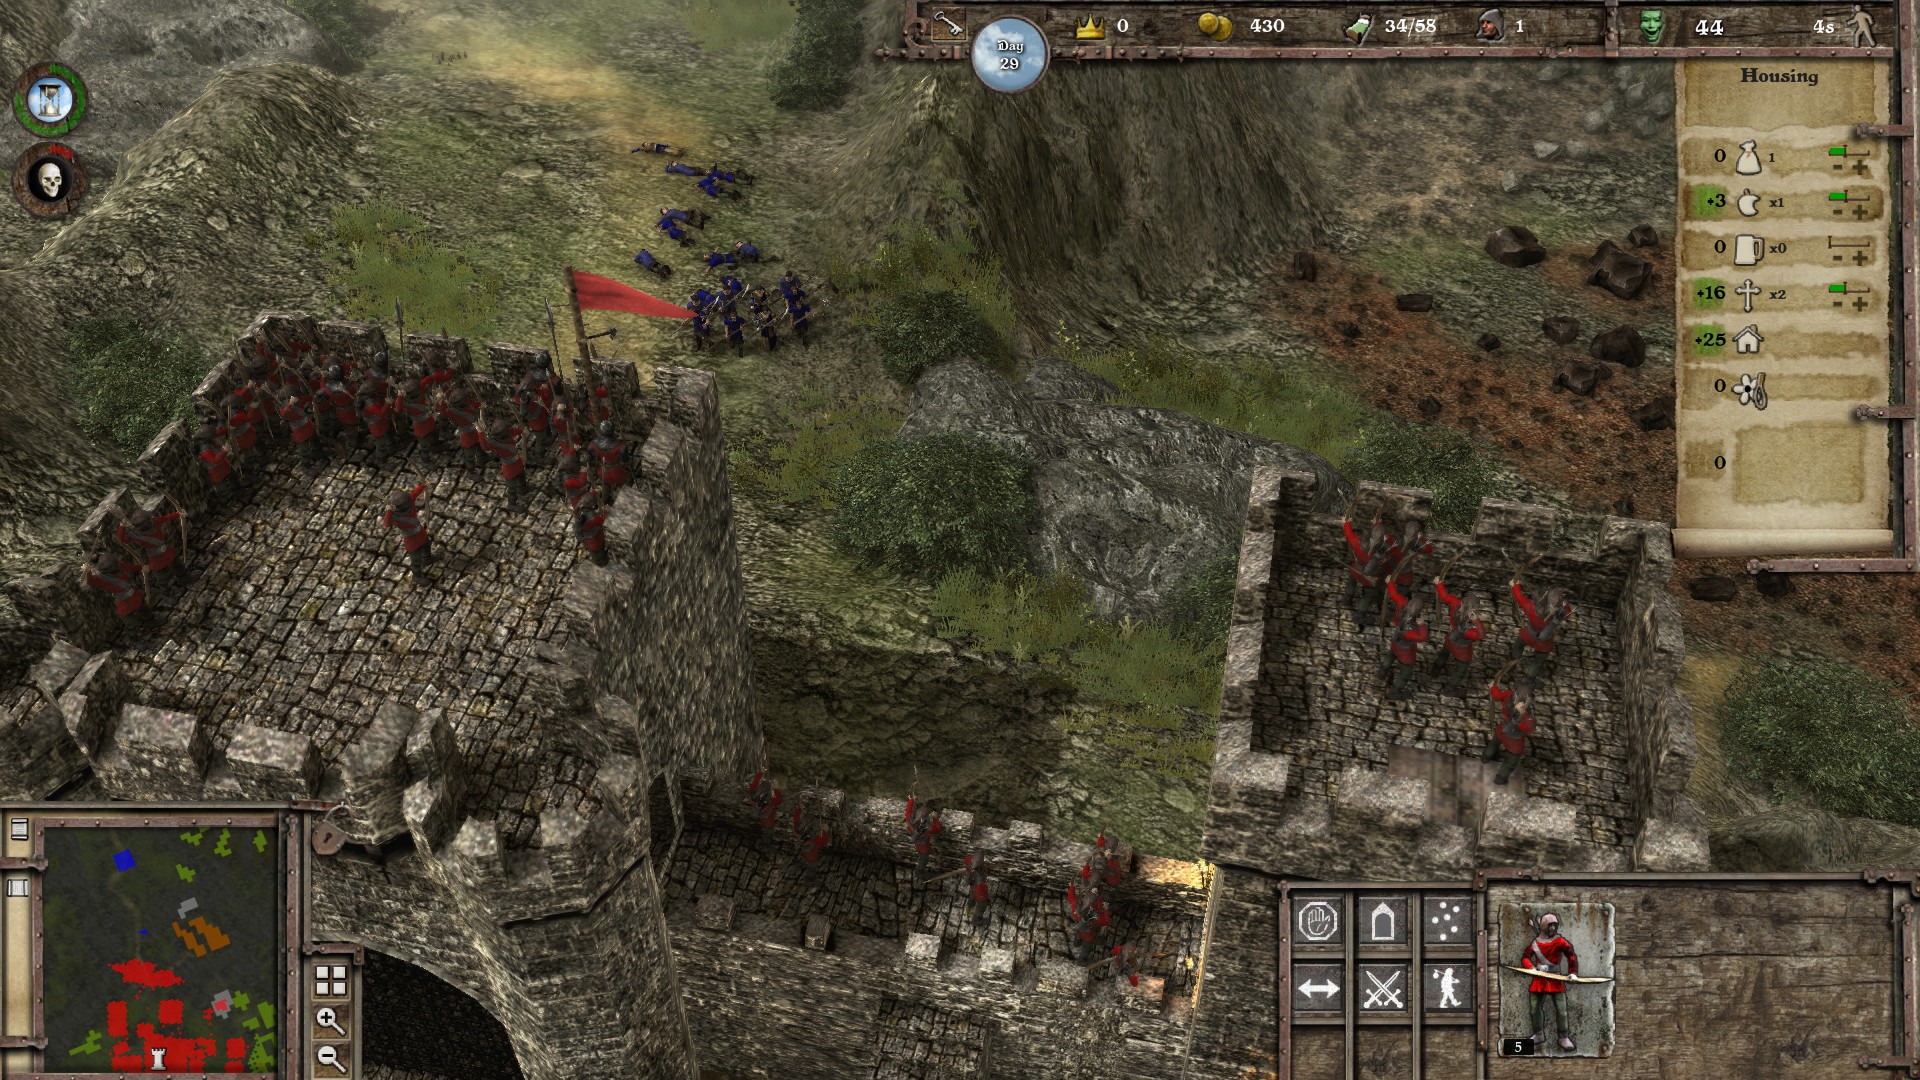 Download game stronghold crusader 3 full version free